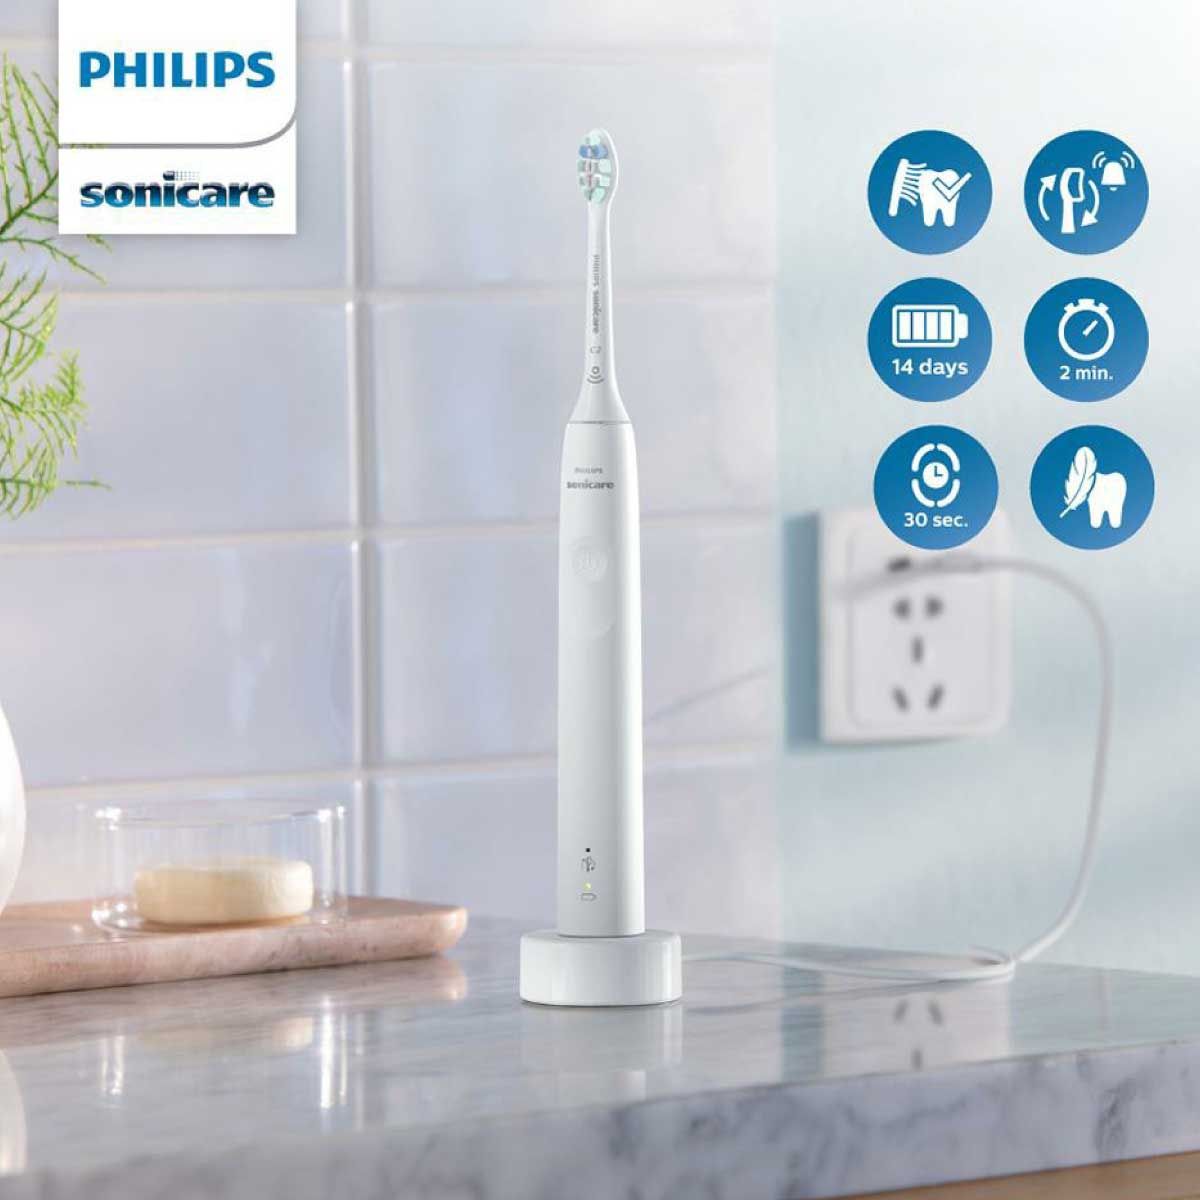 PHILIPS แปรงสีฟันไฟฟ้า Sonicare รุ่น HX3671/23